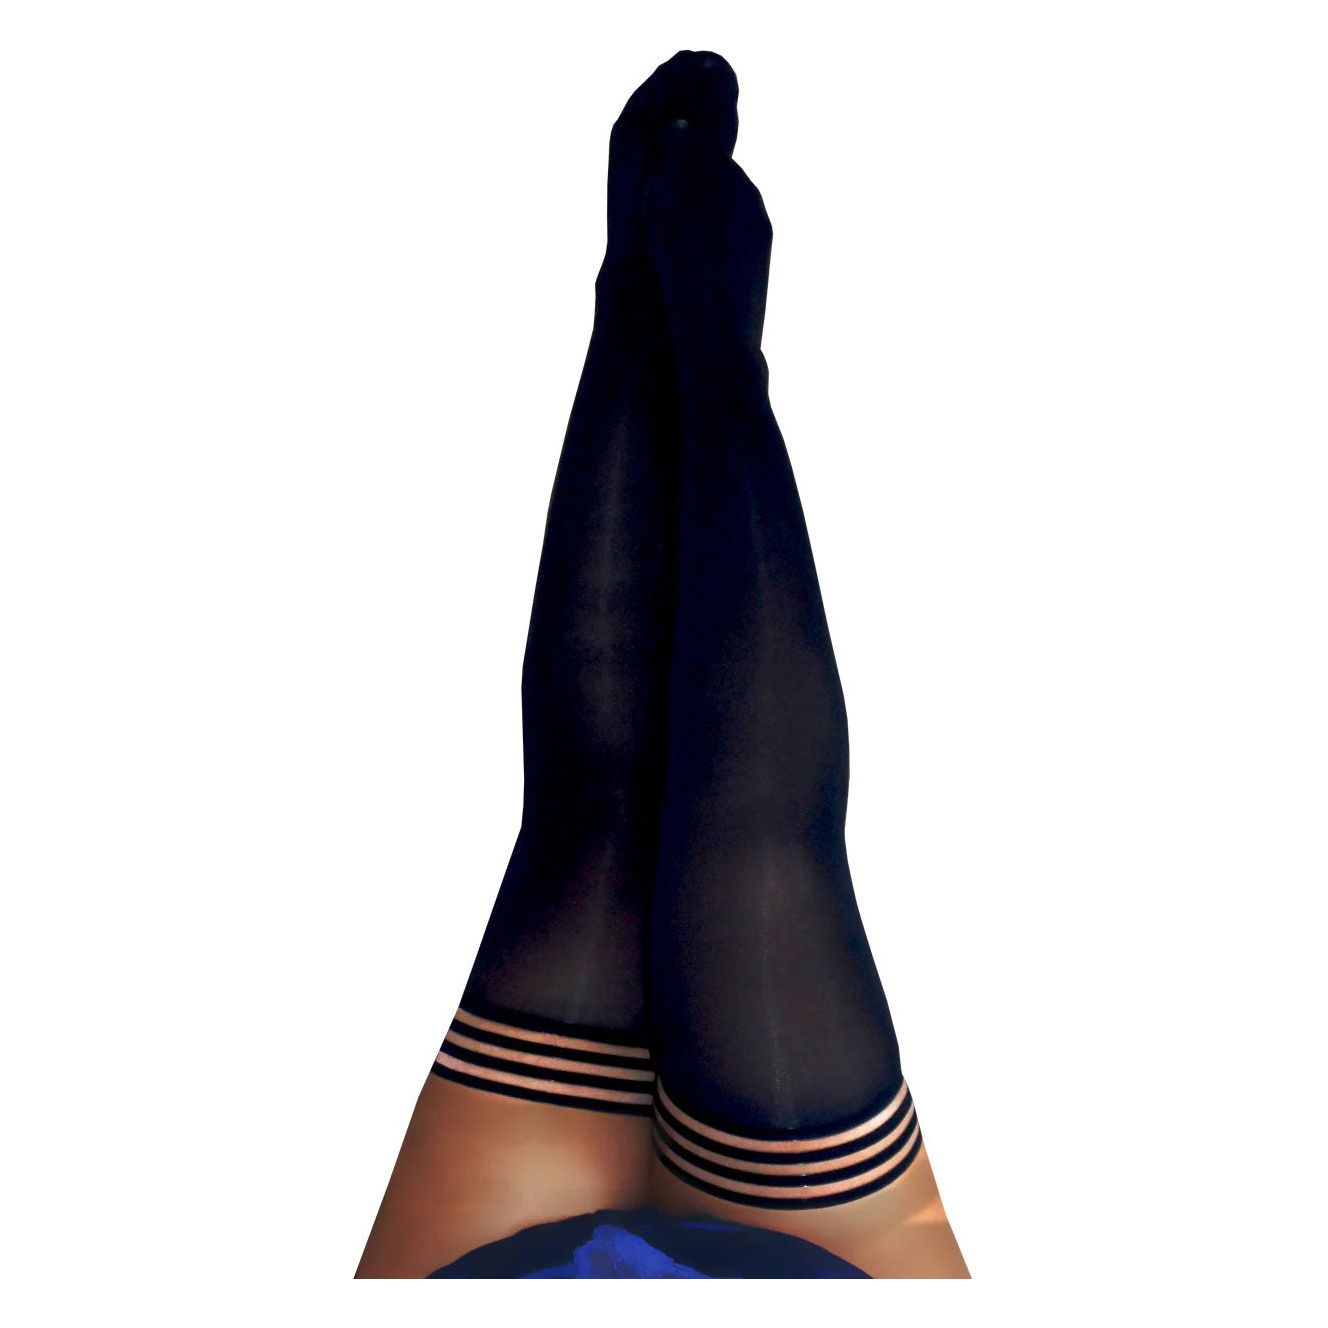 Danielle - Black Opaque Thigh High - Size D -  Black KX-1319D-BLK-D